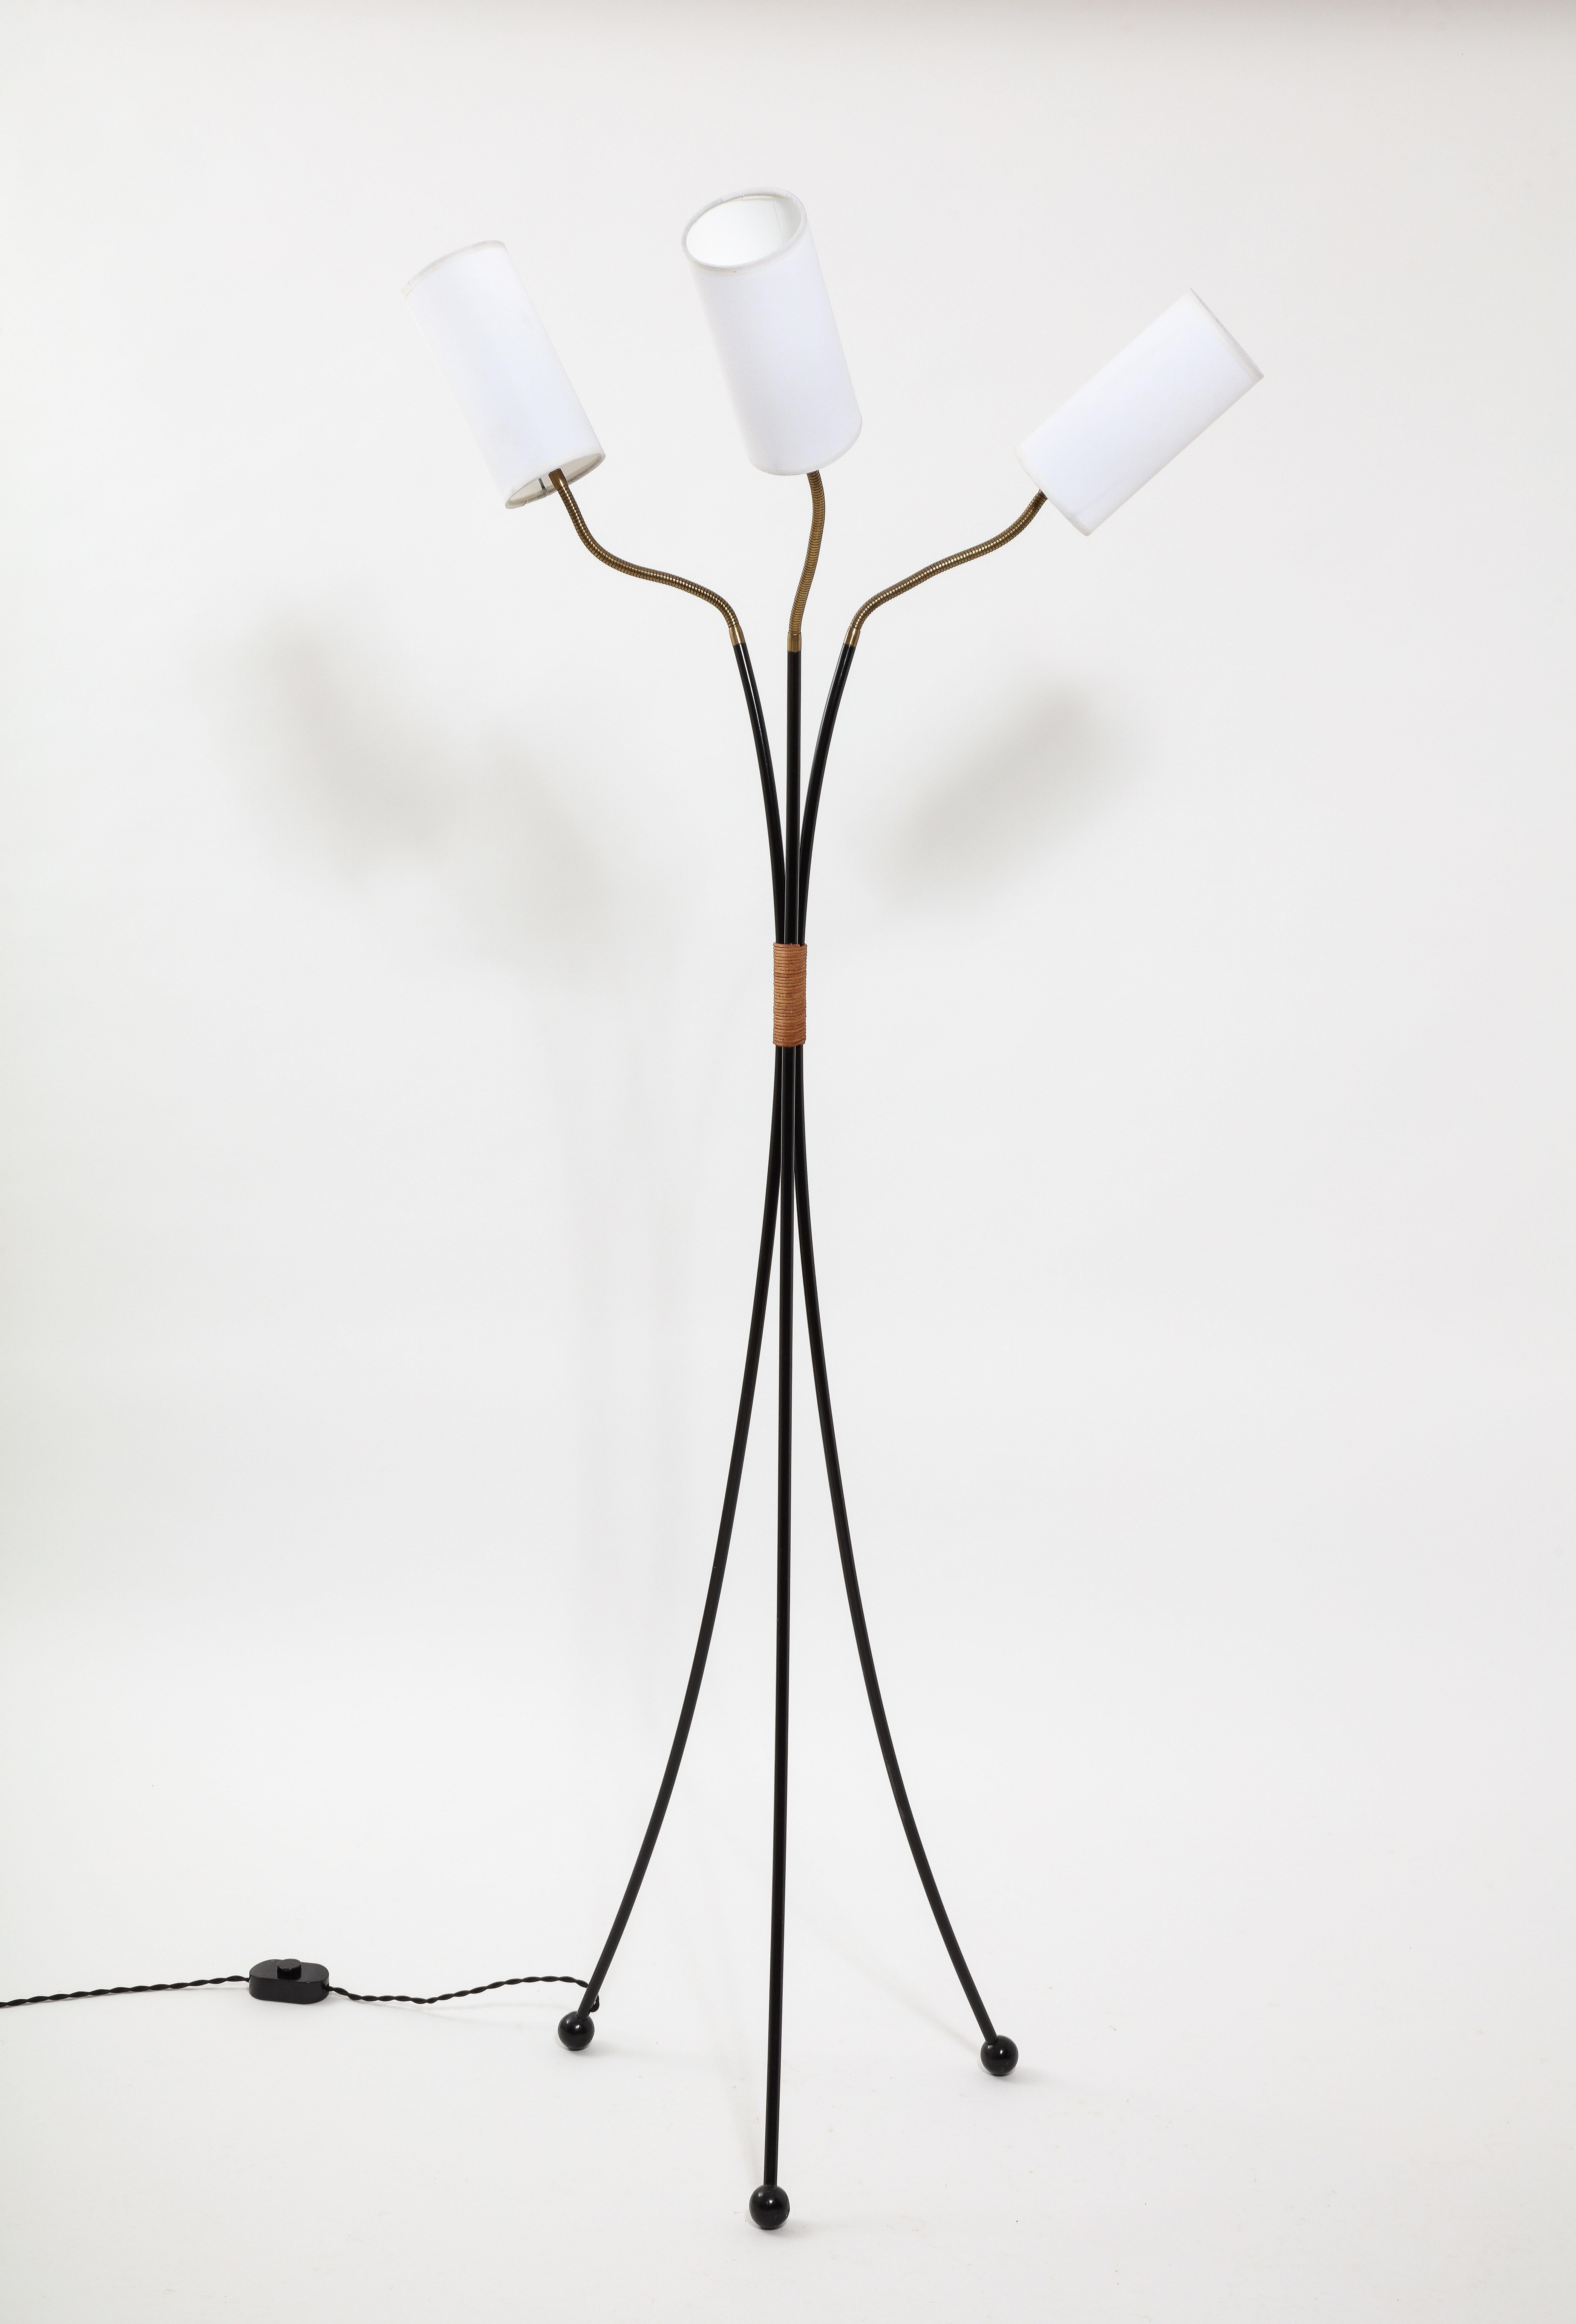 20th Century Adjustable Tripod Floor Lamp, France 1960s For Sale